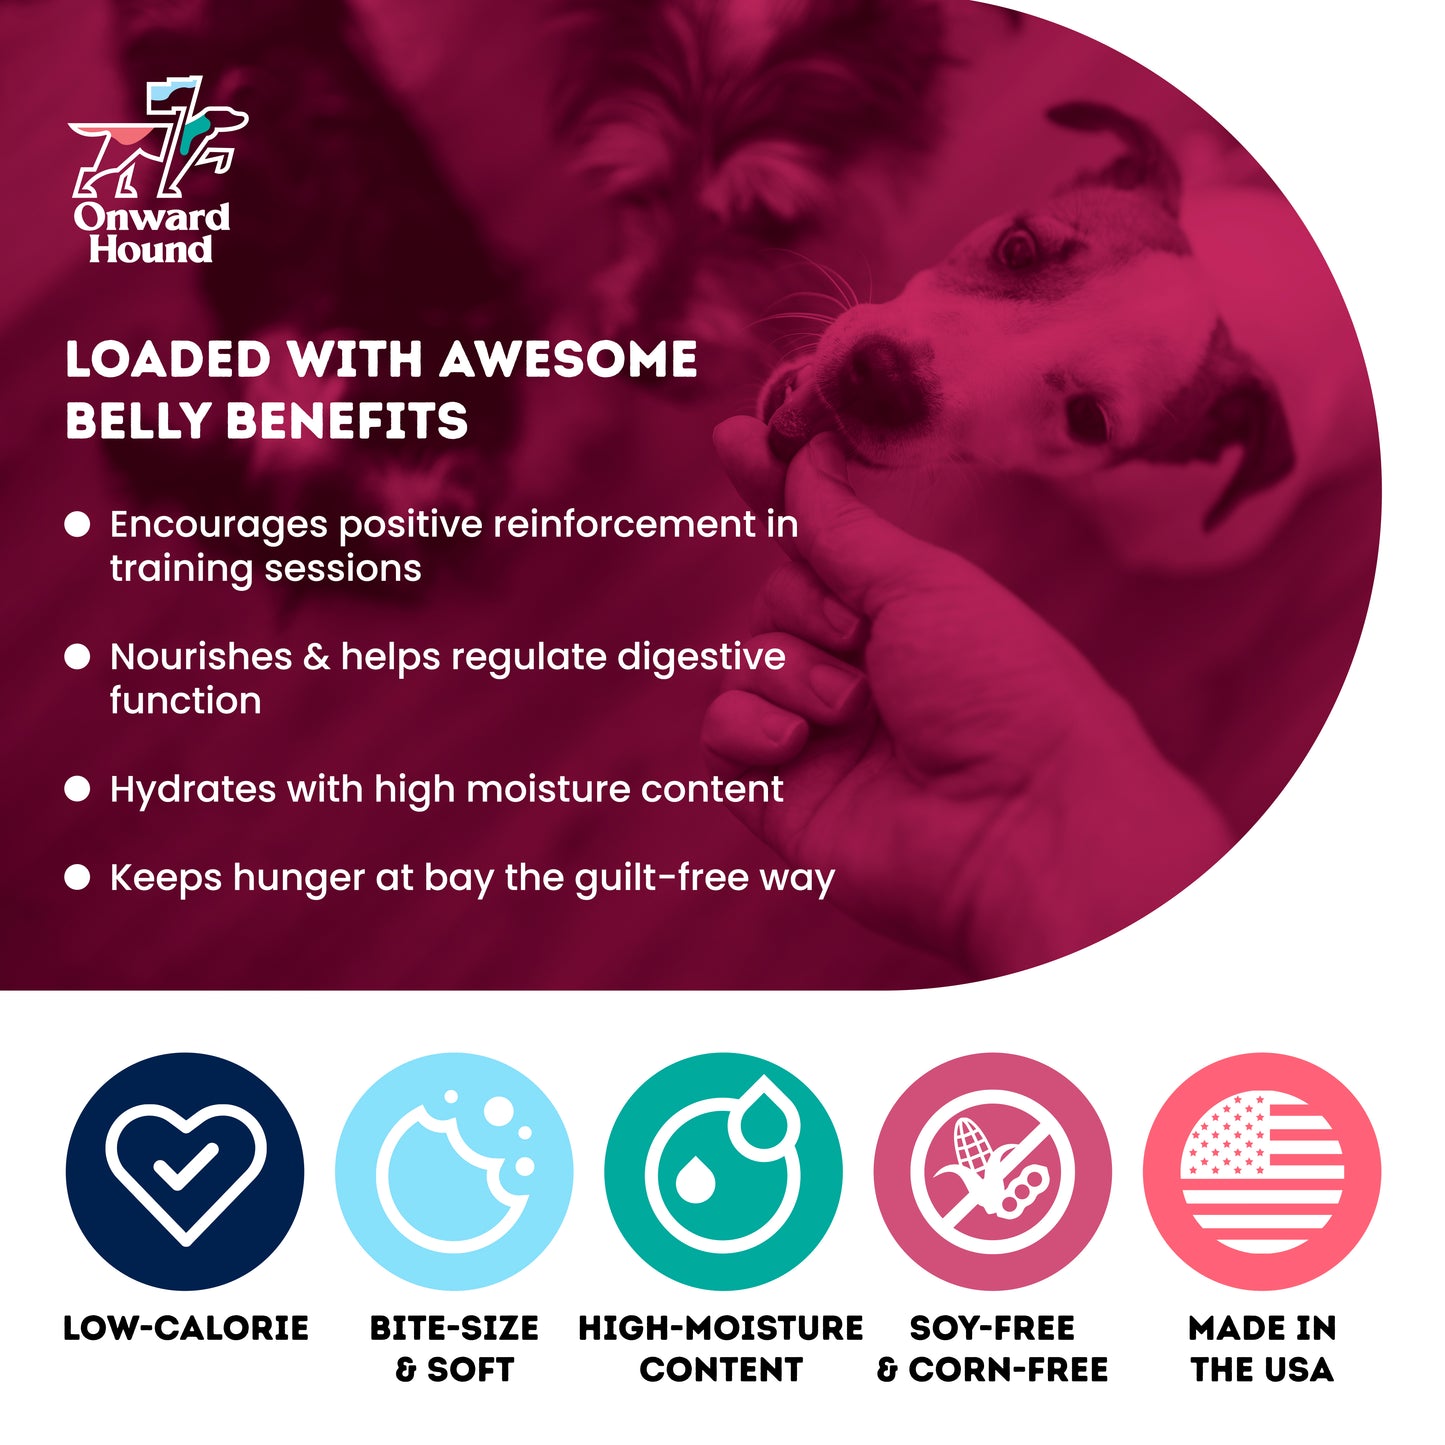 (2 Pack) Onward Hound Belly Benefits 10oz Bag - 4 Month Subscription